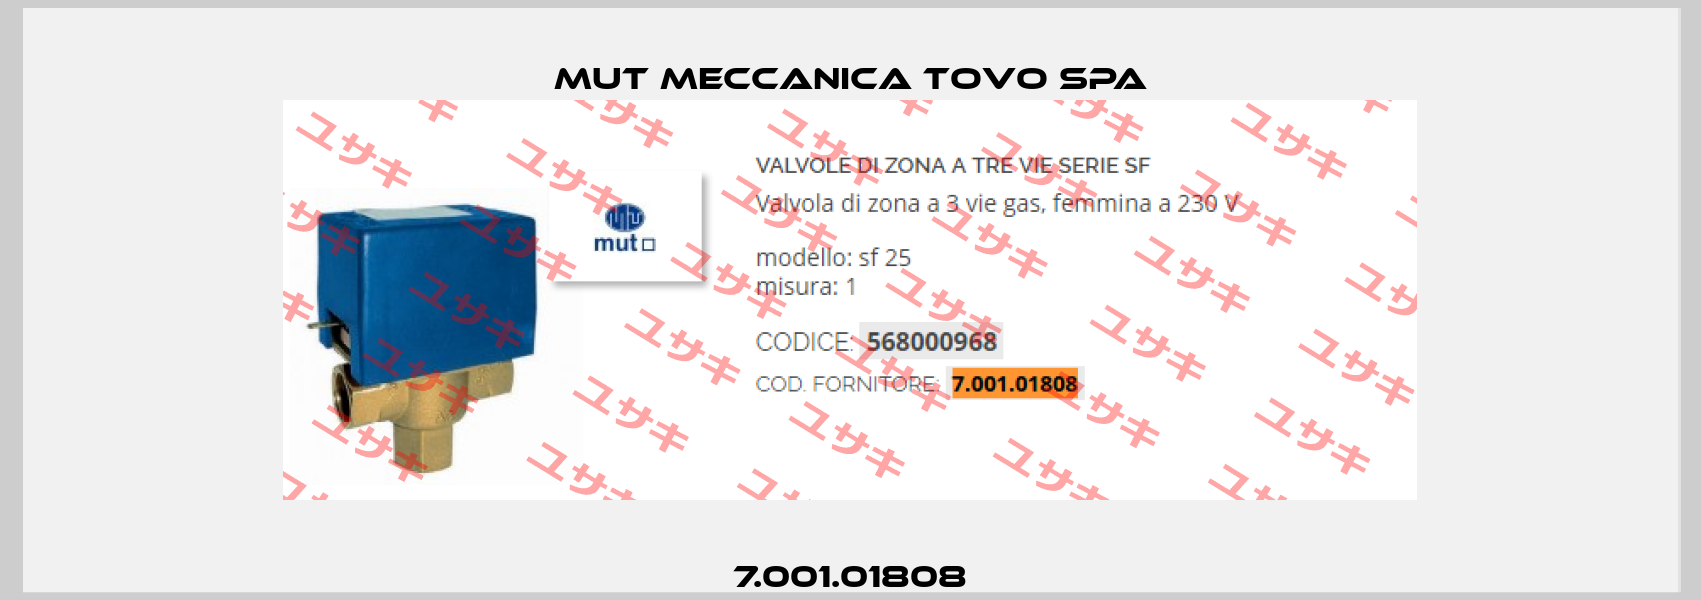 7.001.01808 Mut Meccanica Tovo SpA